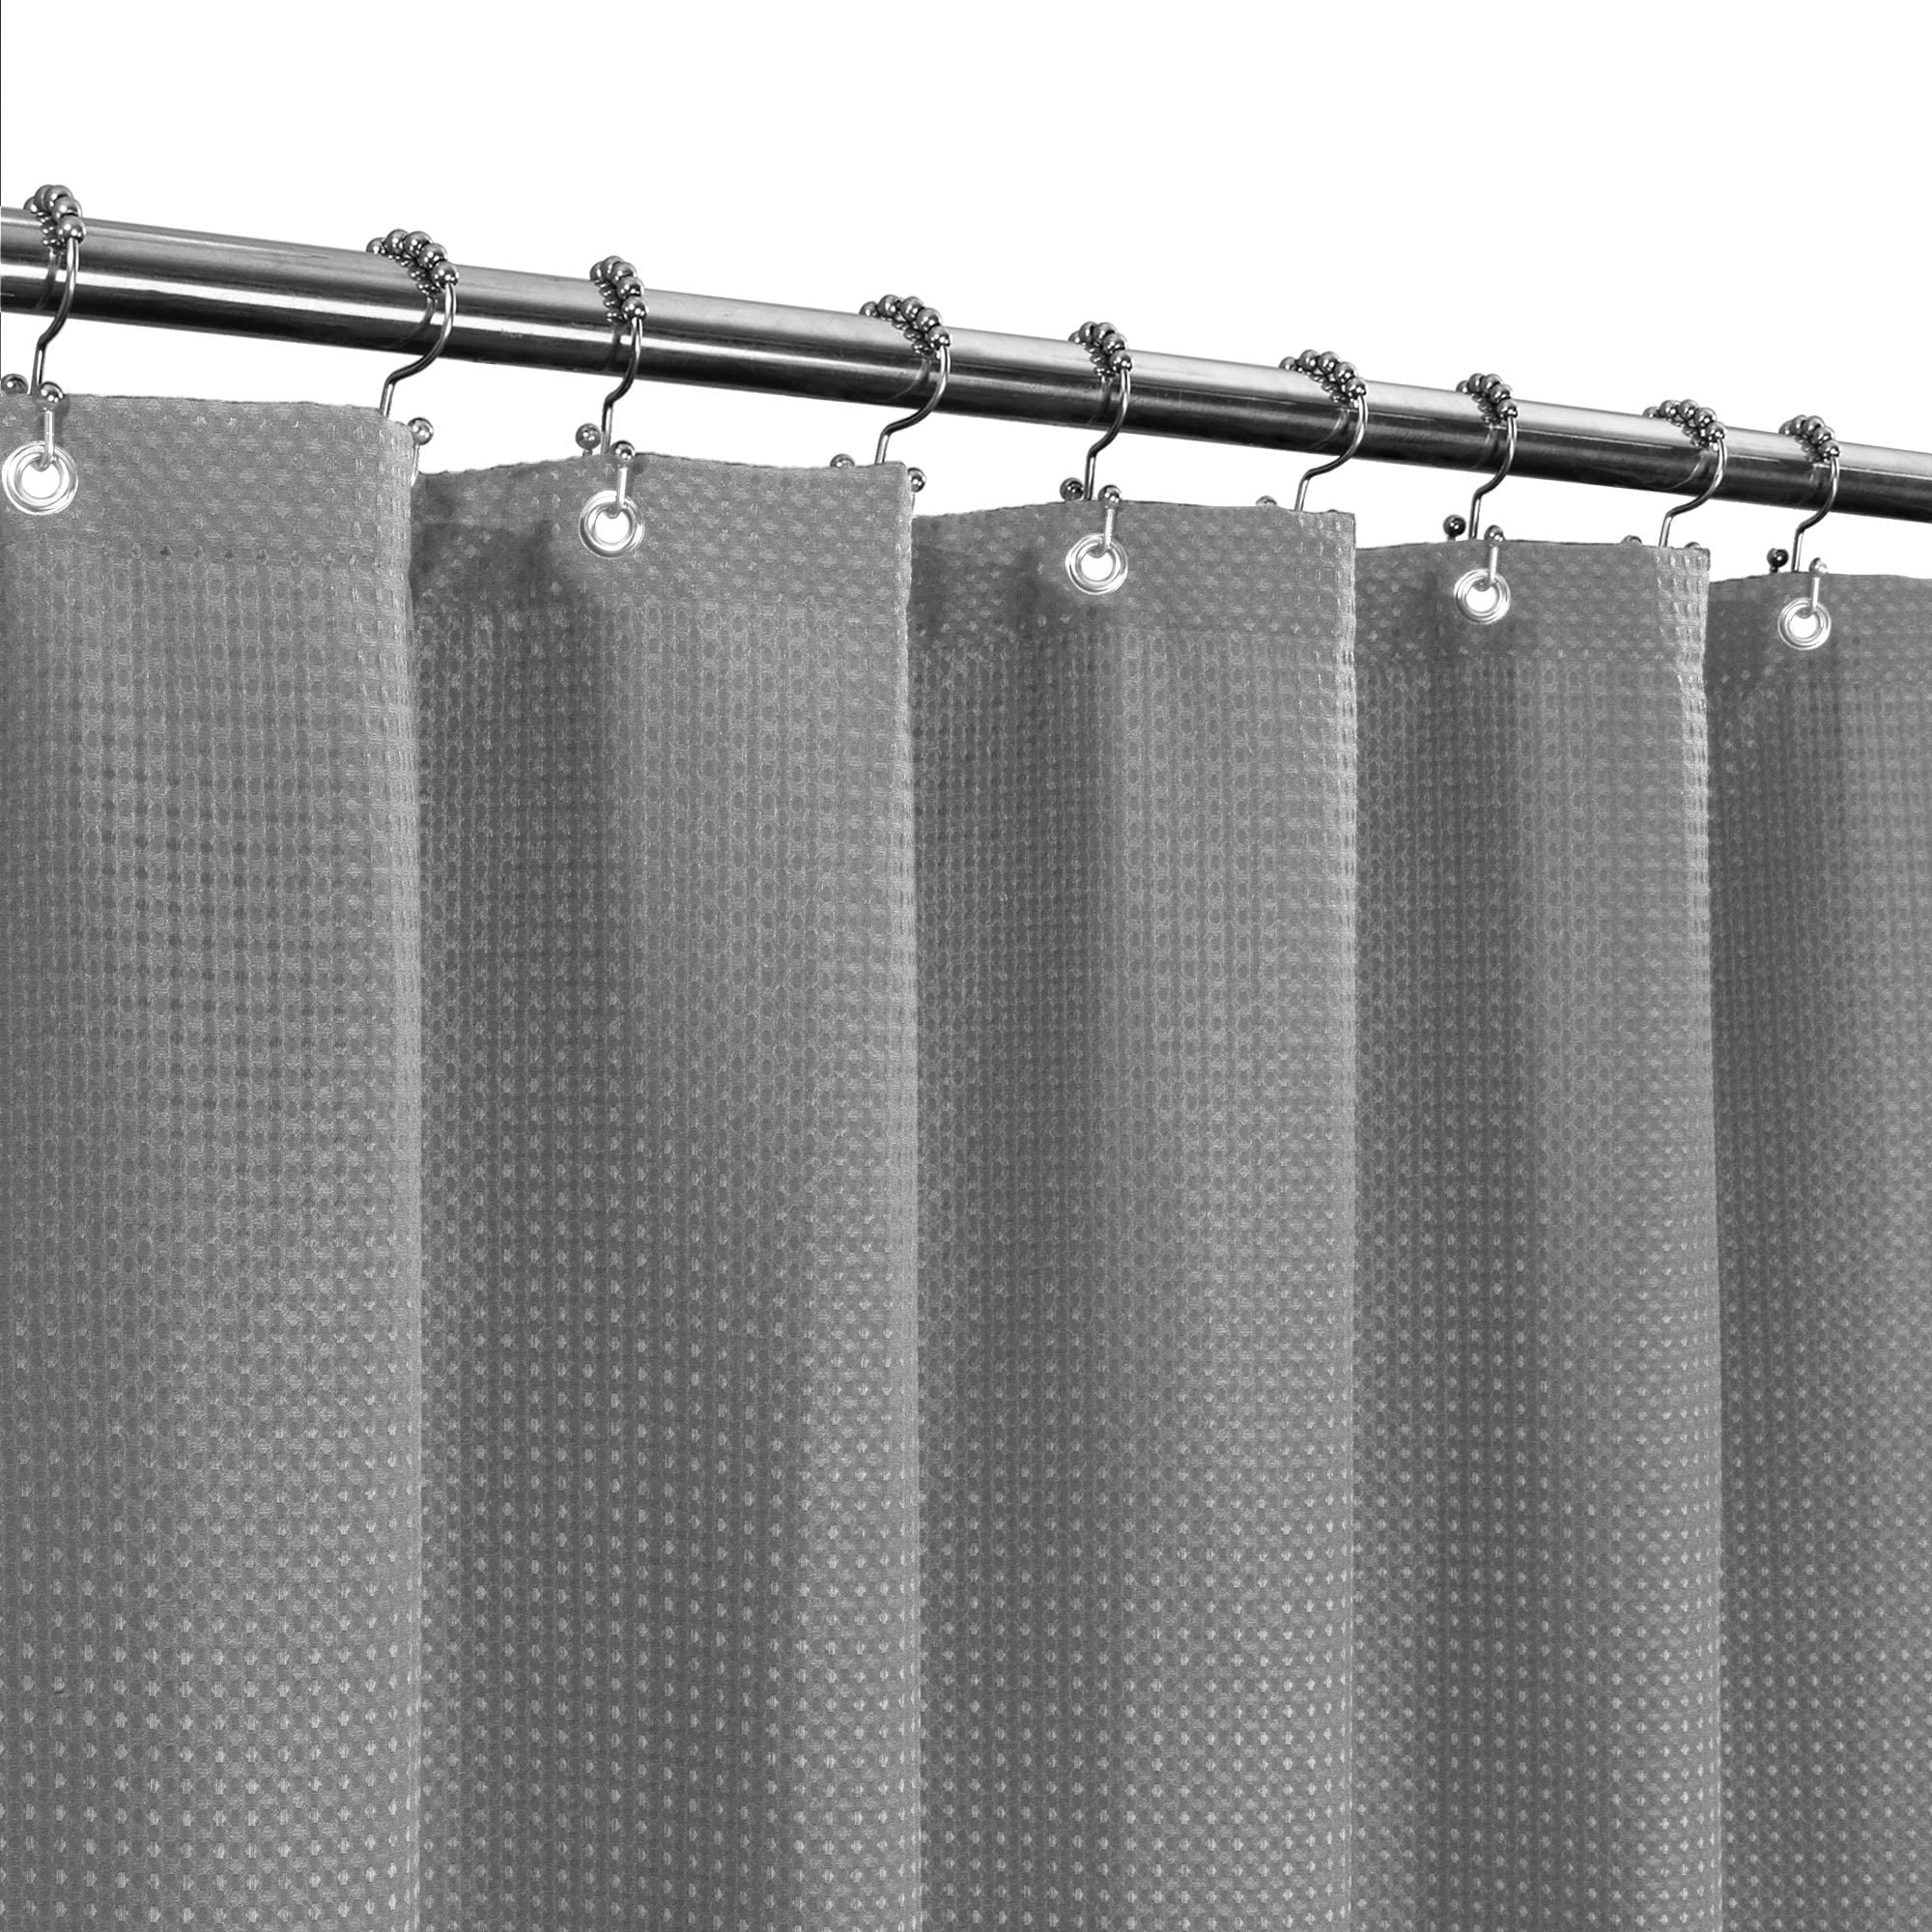 Big Diamond For Lover Waterproof Fabric Shower Curtain With Hooks Bathroom 71"